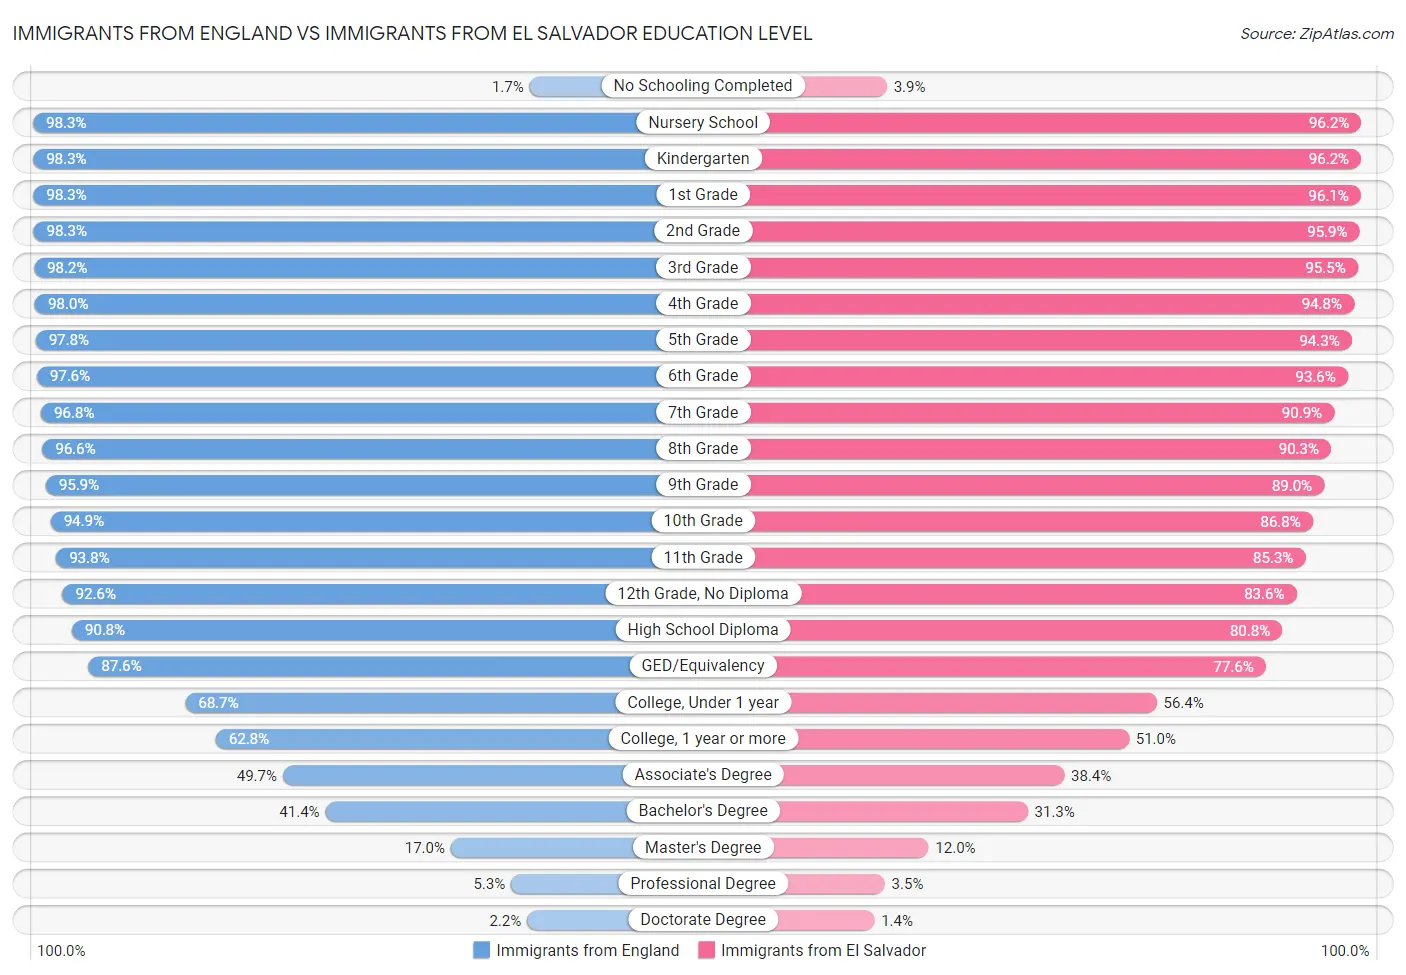 Immigrants from England vs Immigrants from El Salvador Education Level